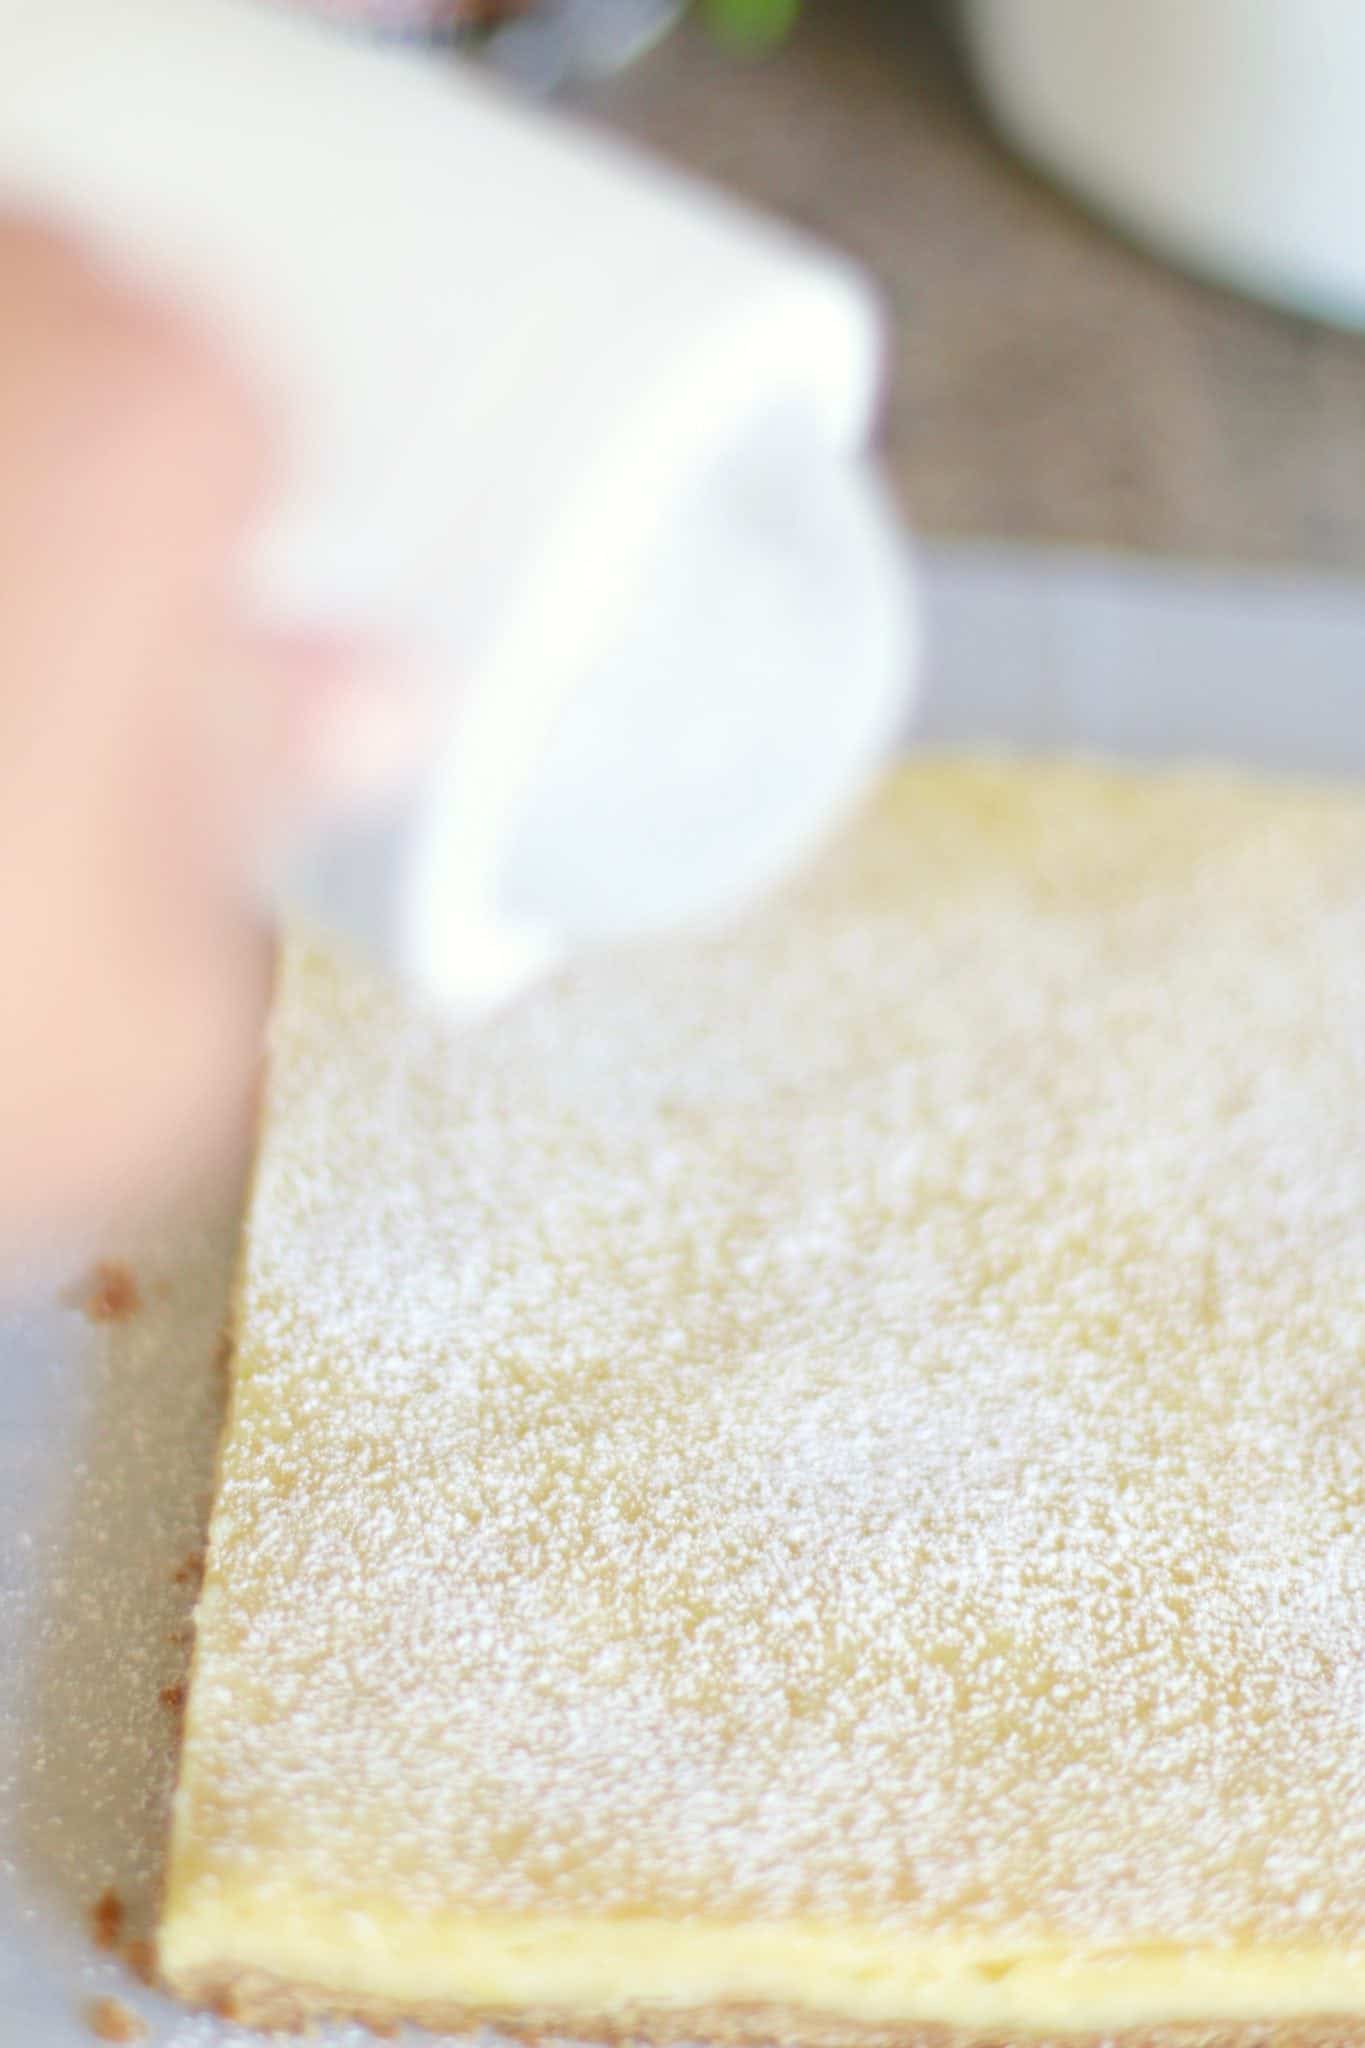 dusting powdered sugar on top of baked lemon bars.